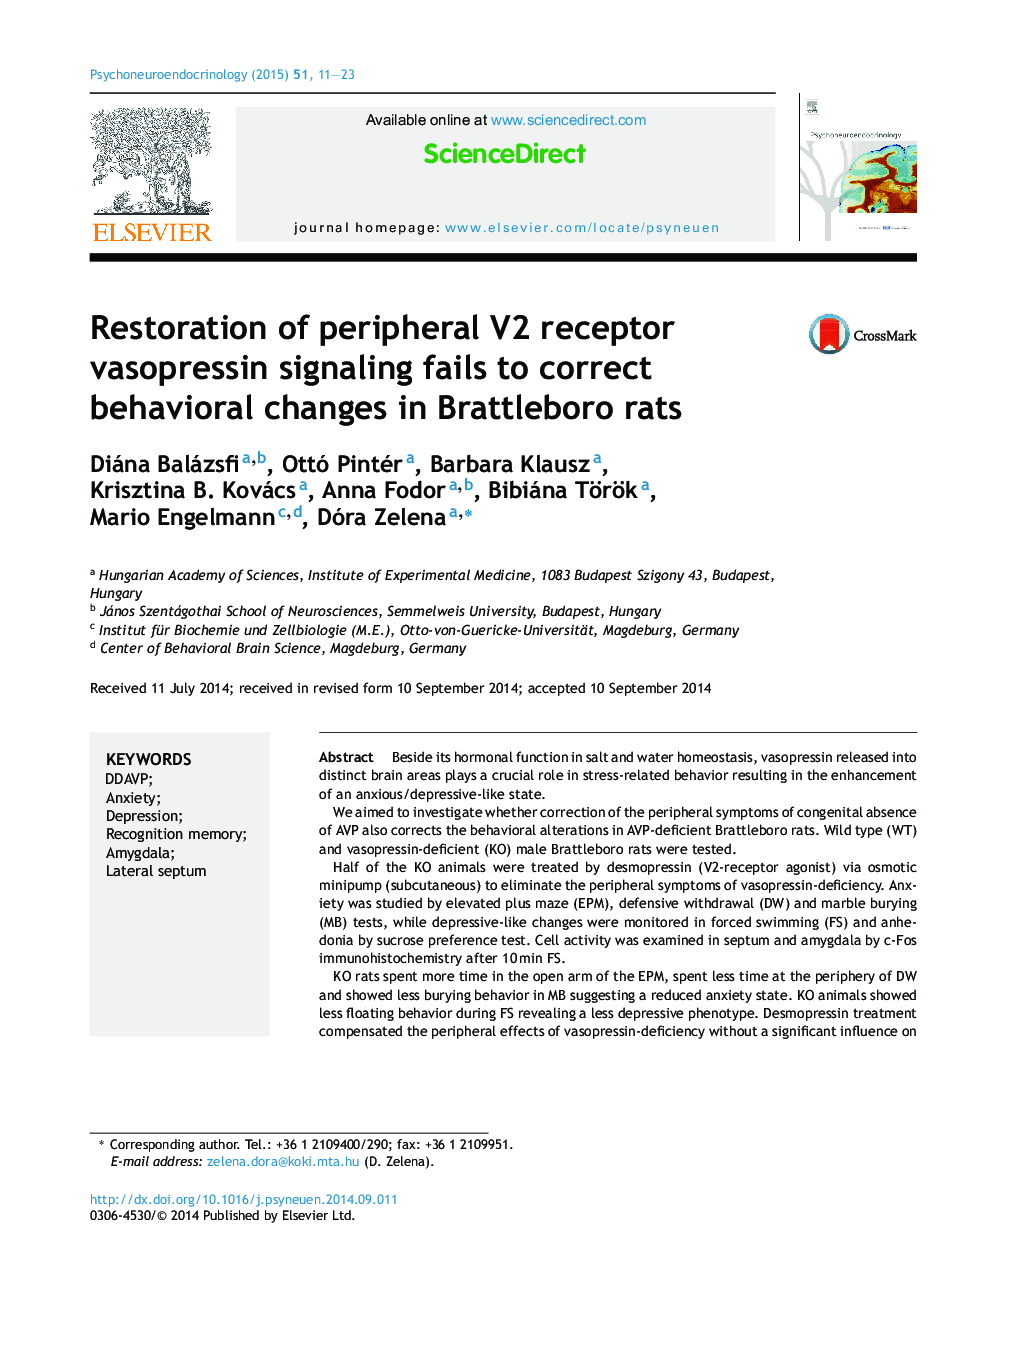 Restoration of peripheral V2 receptor vasopressin signaling fails to correct behavioral changes in Brattleboro rats